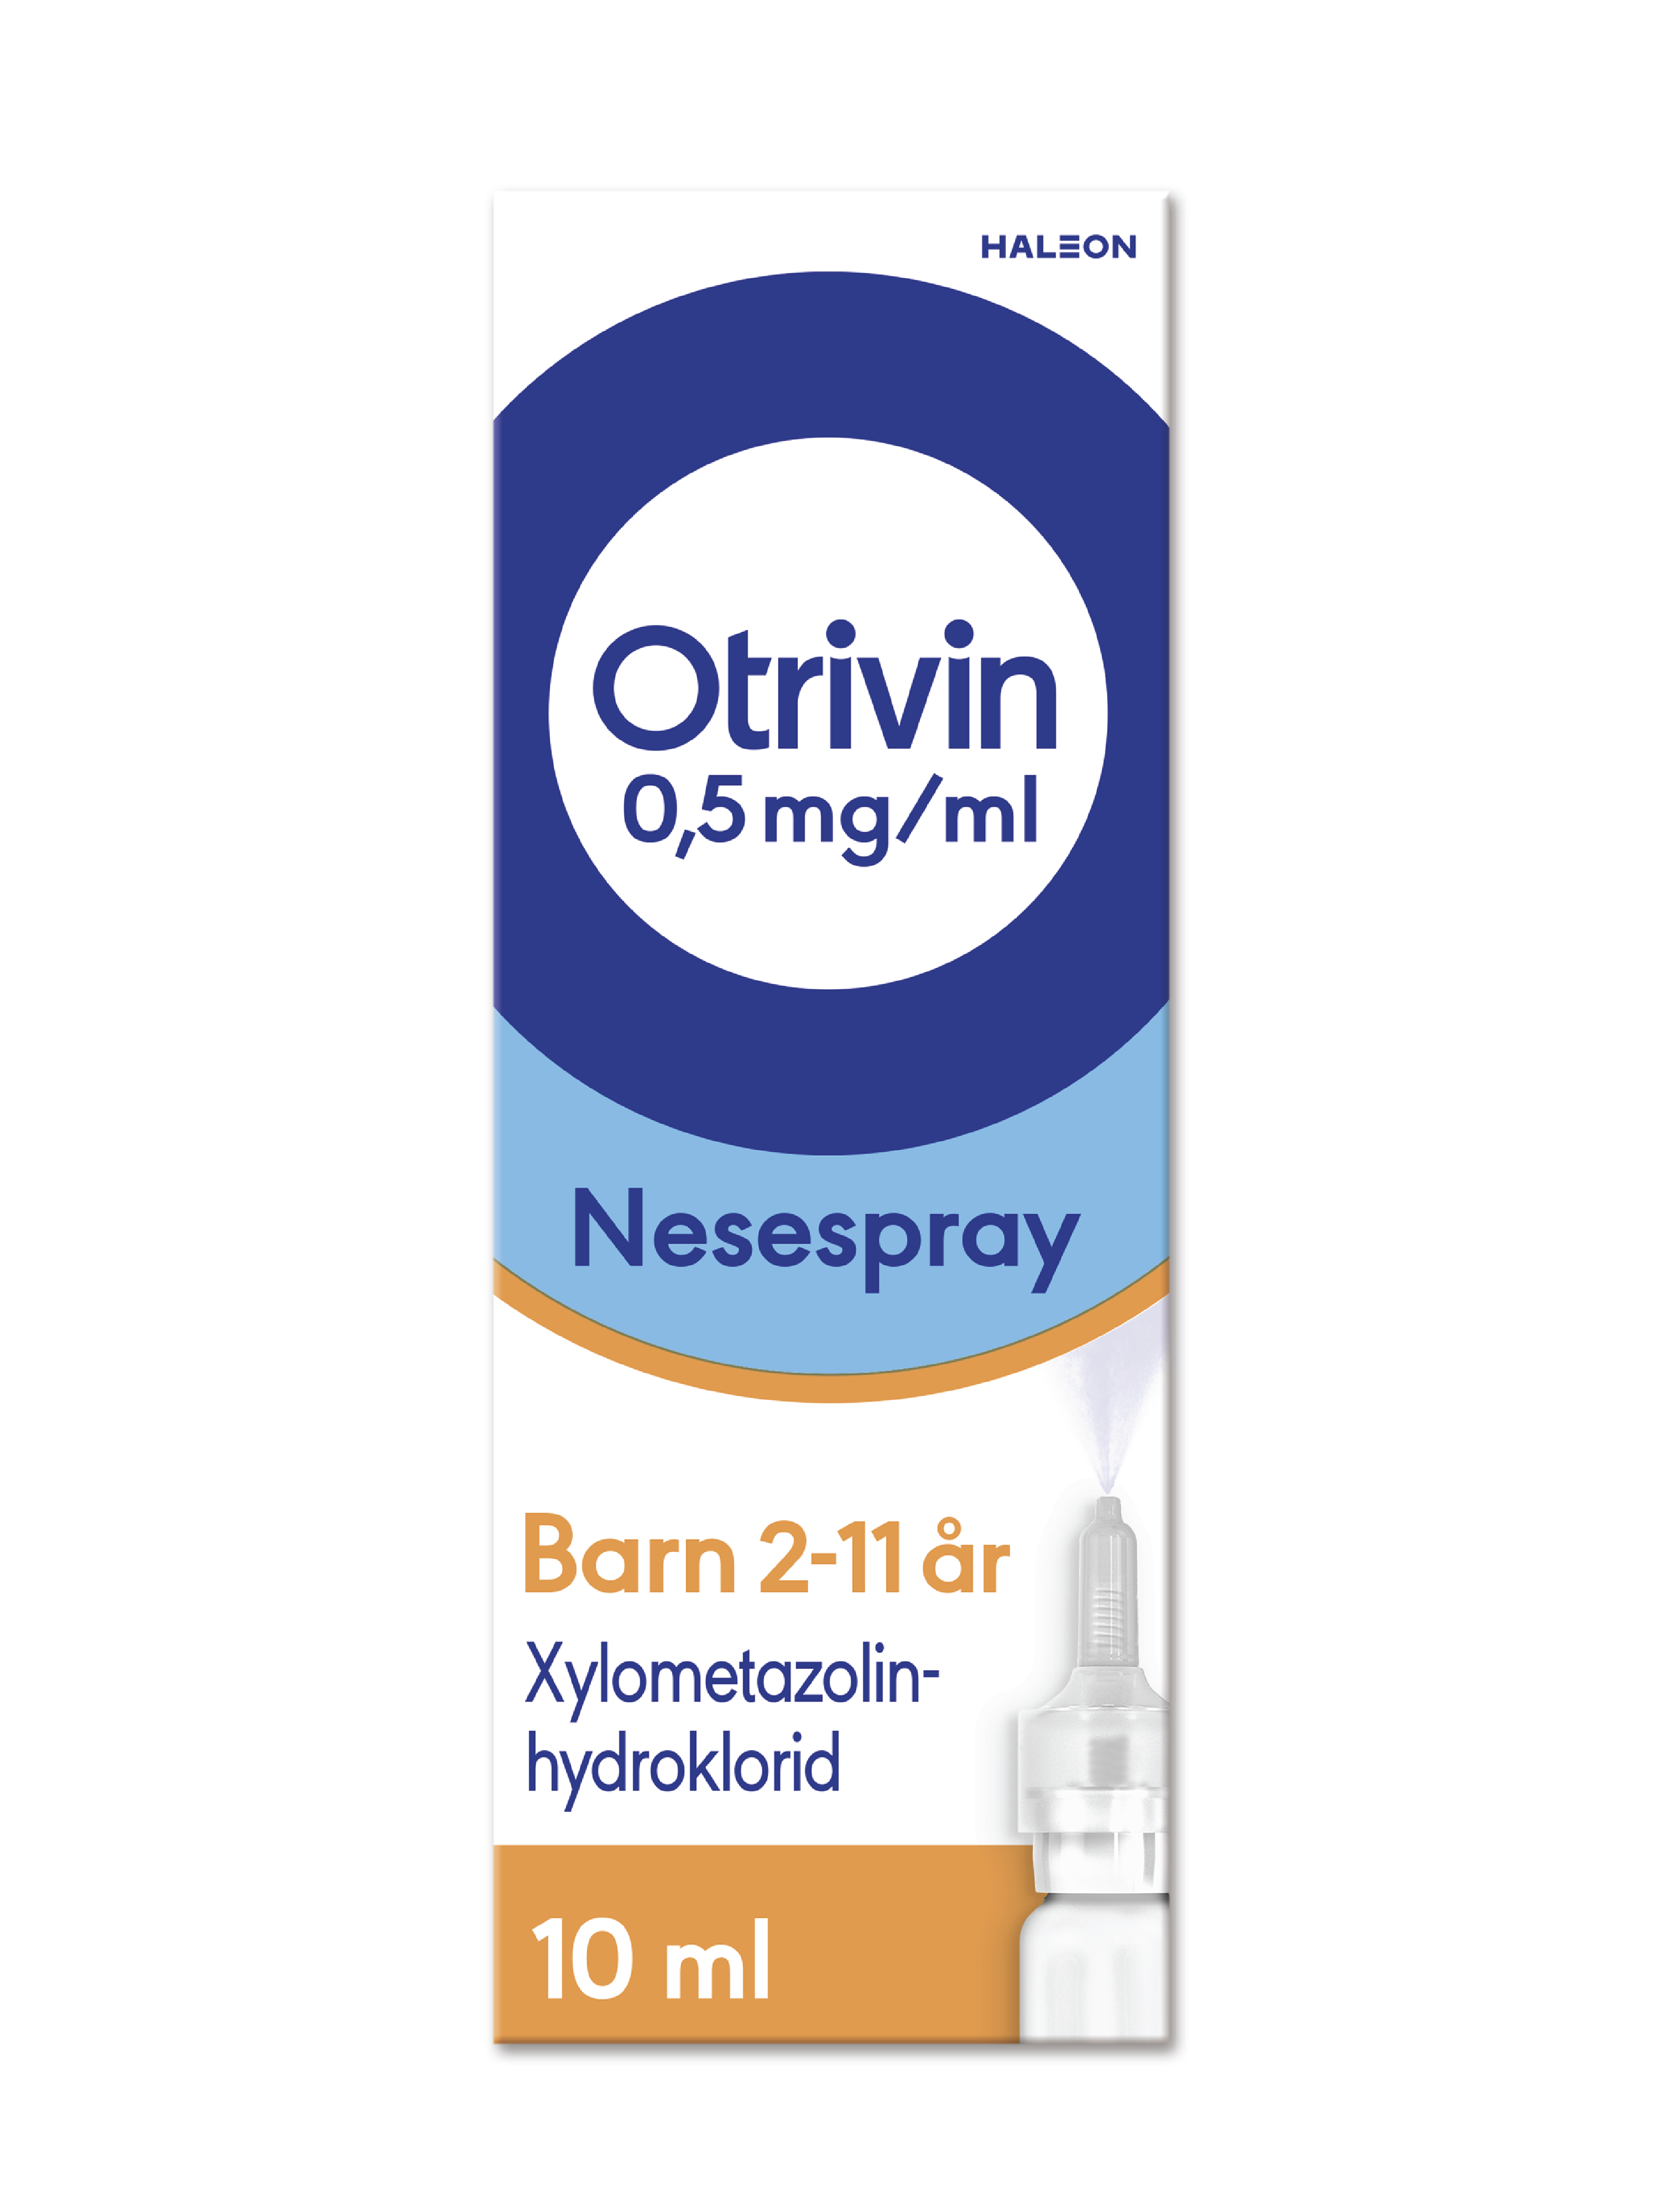 Otrivin Nesespray 0,5 mg/ml, 10 ml